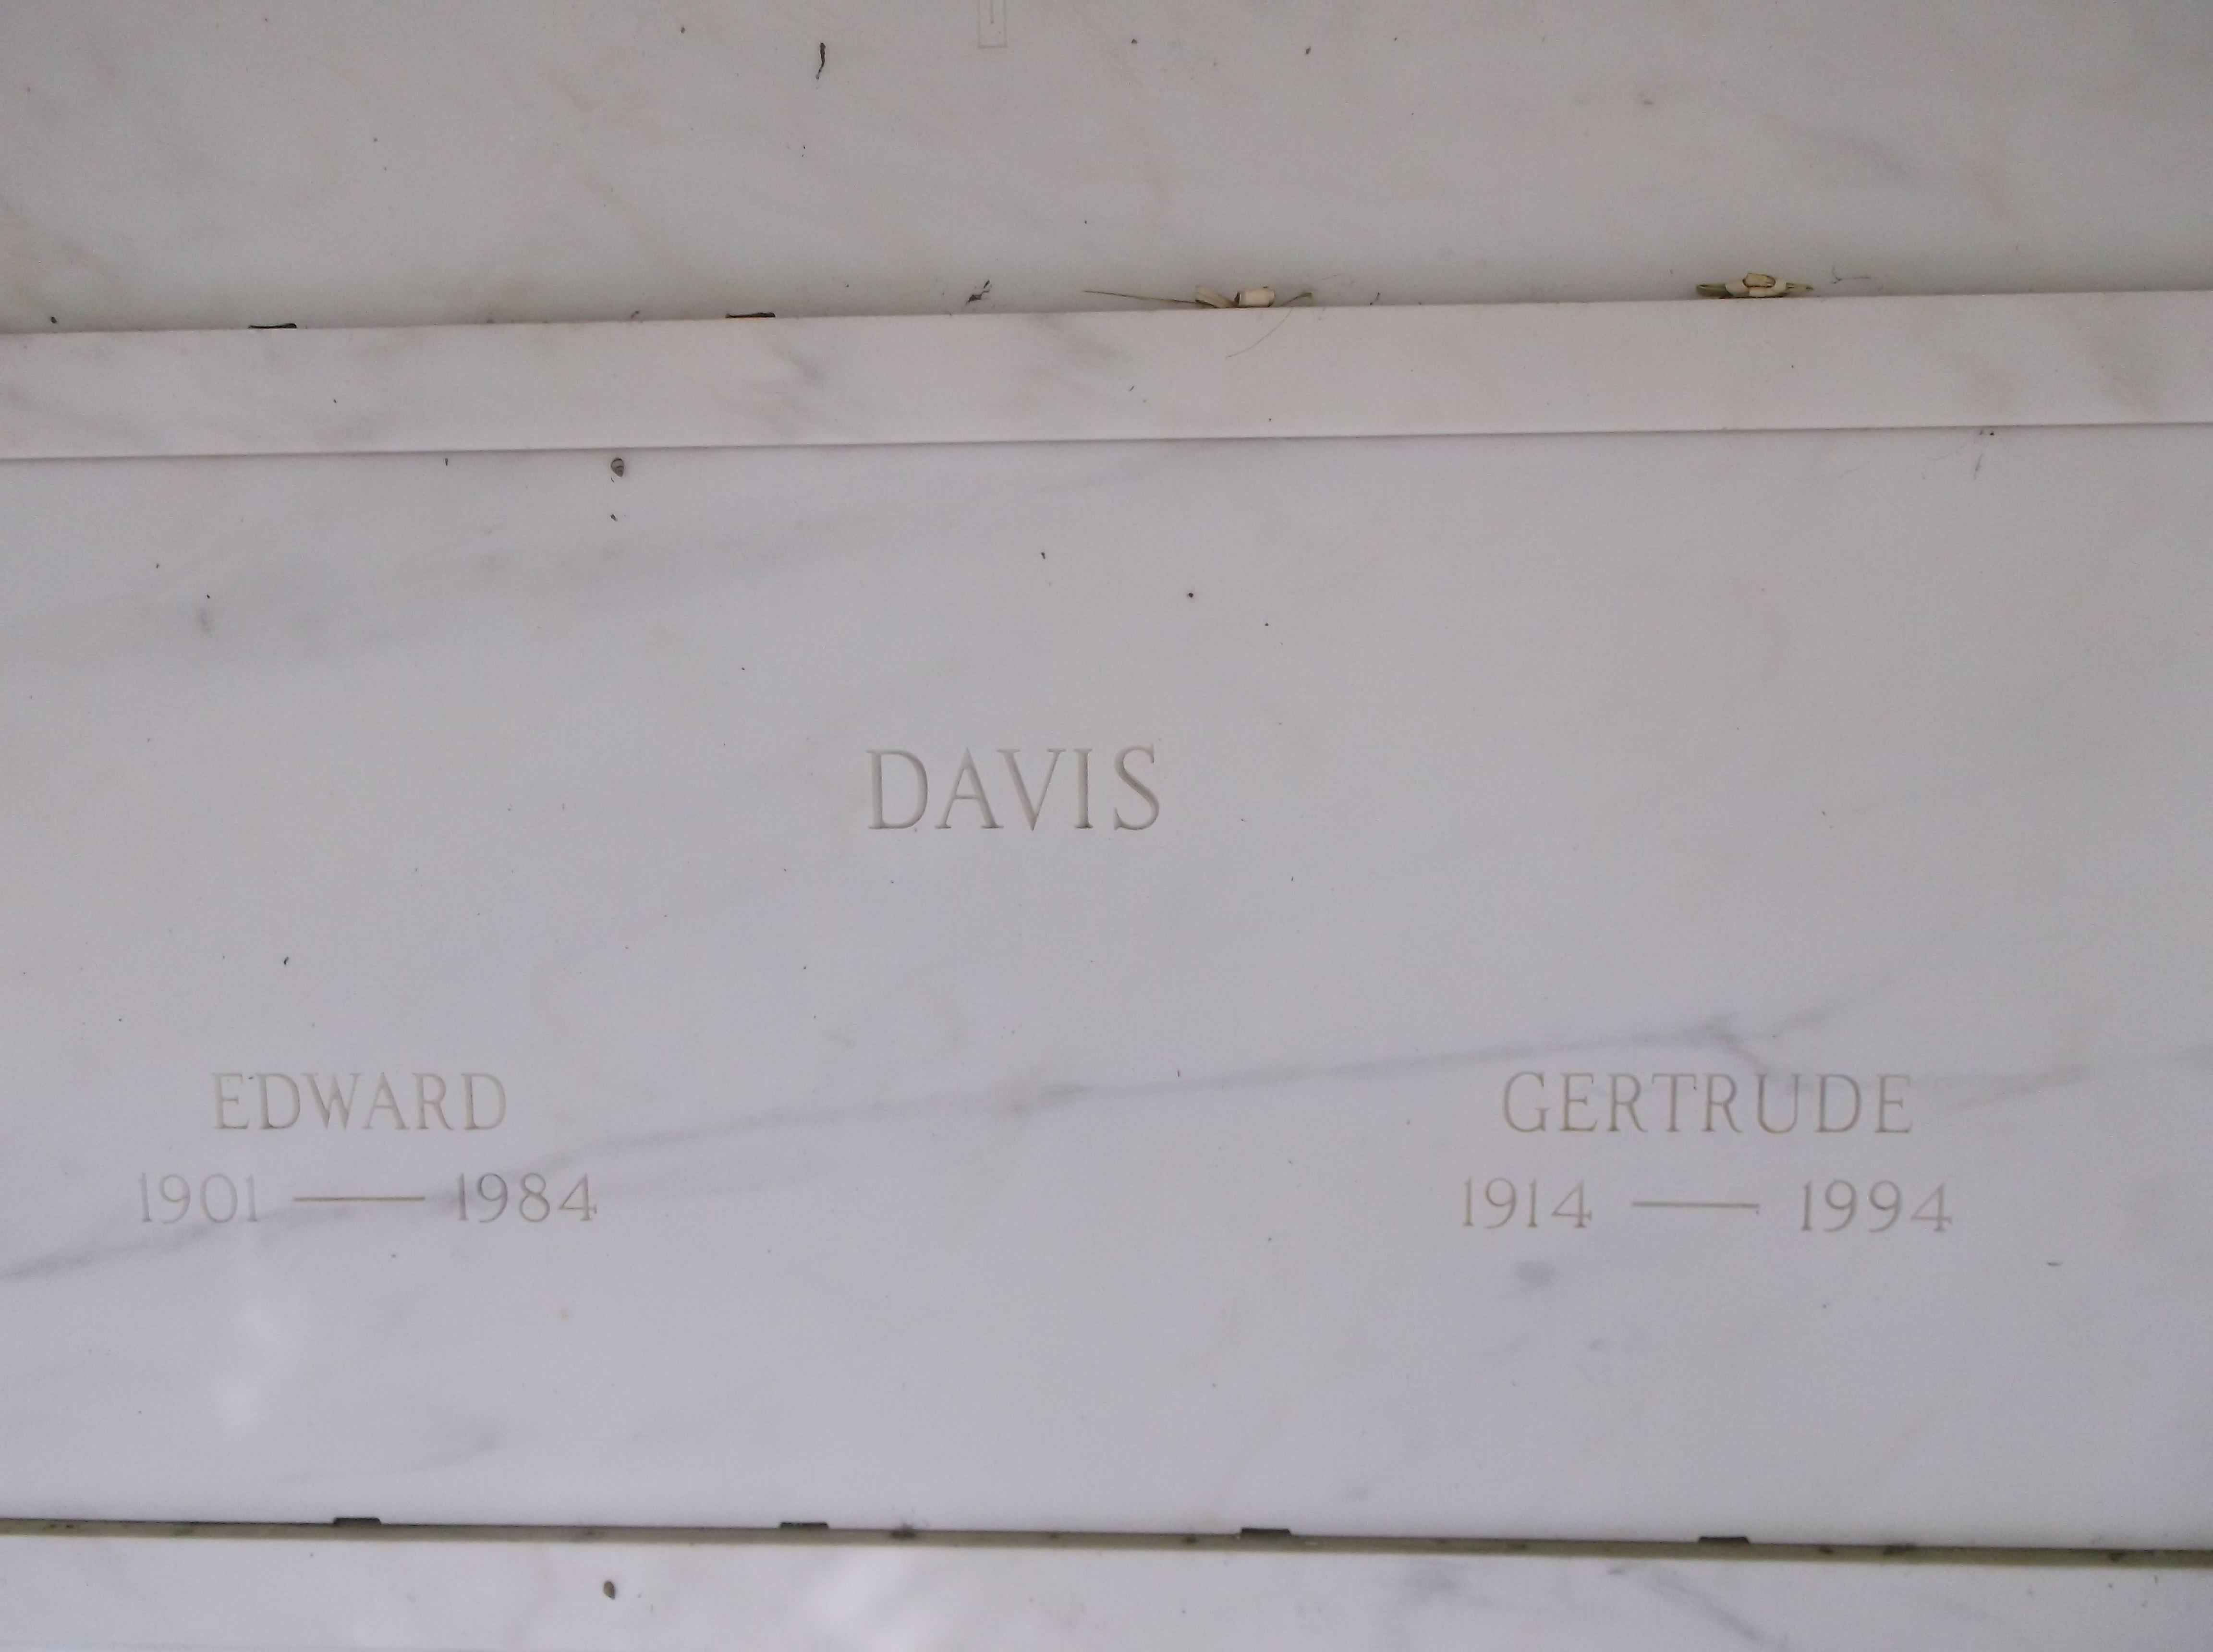 Gertrude Davis